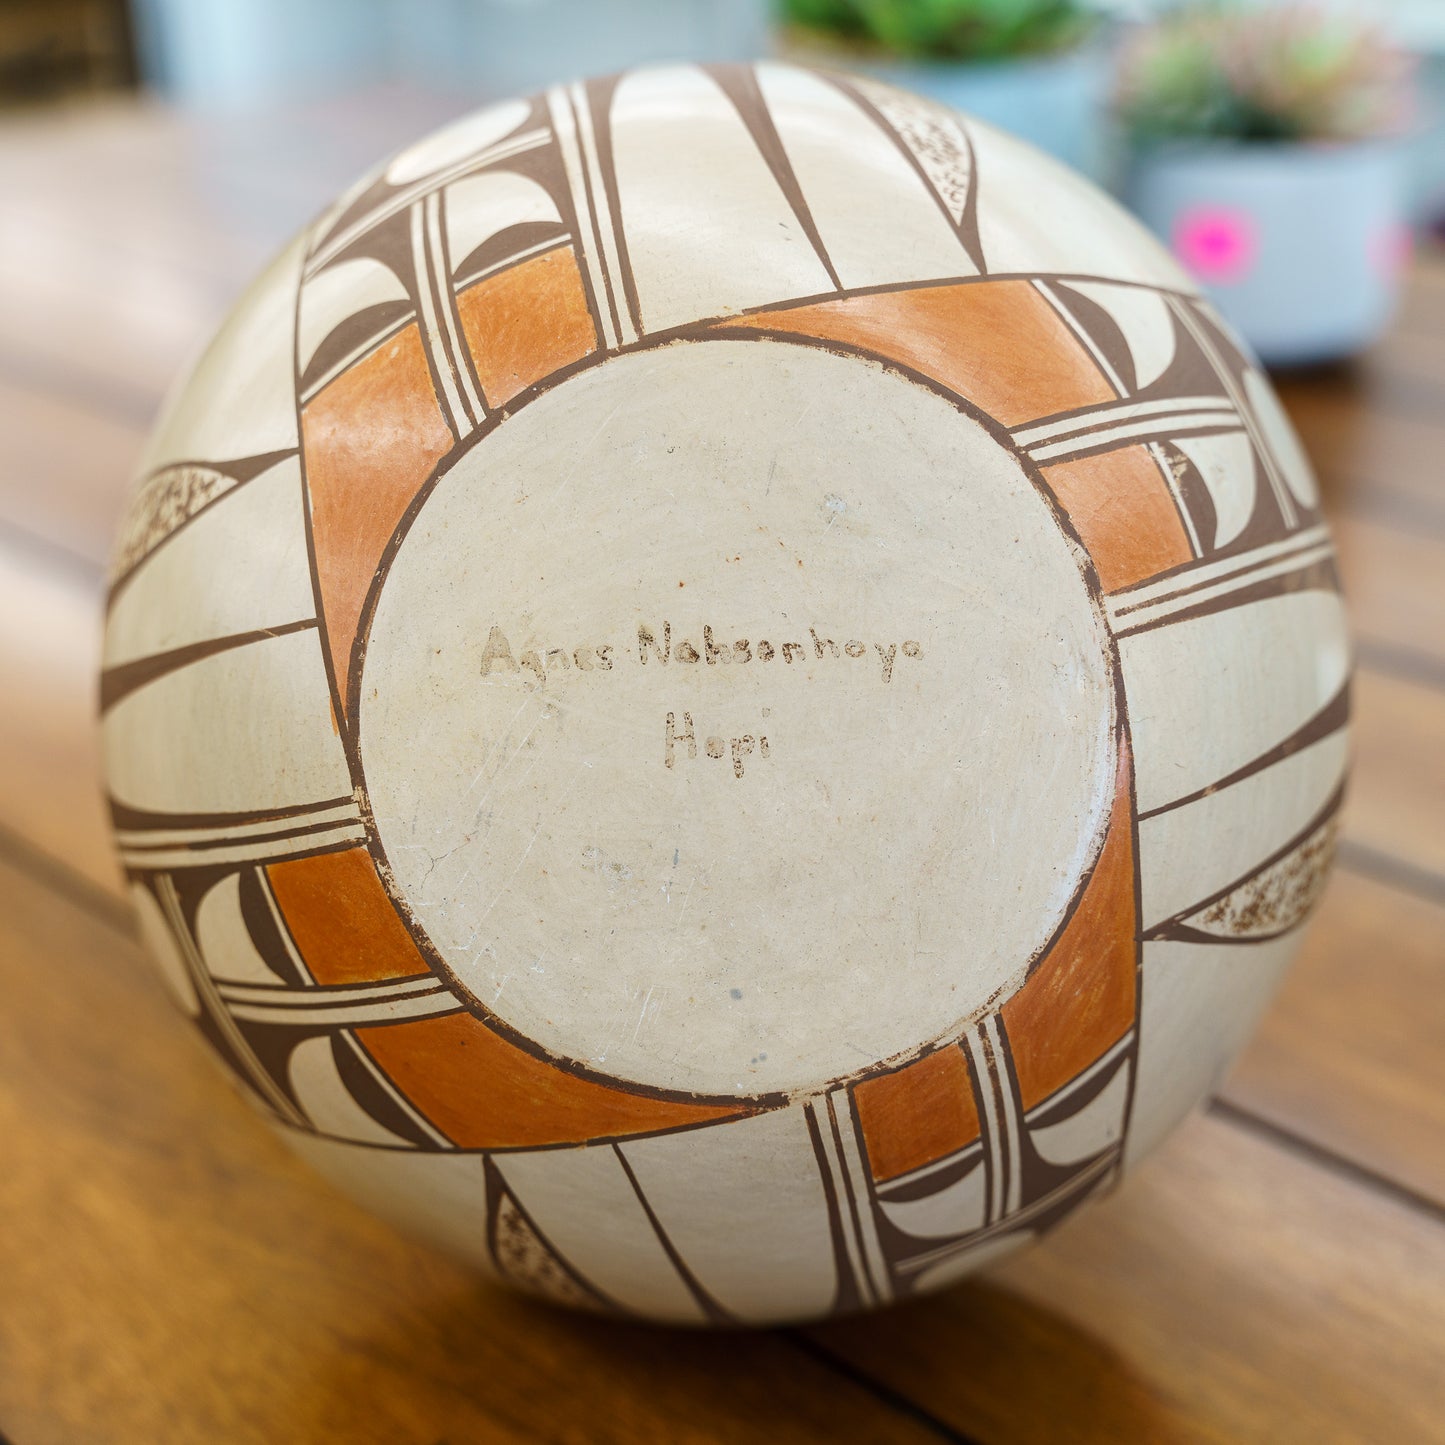 Hopi Indian Pottery Vase by Agnes Nahsonhoya